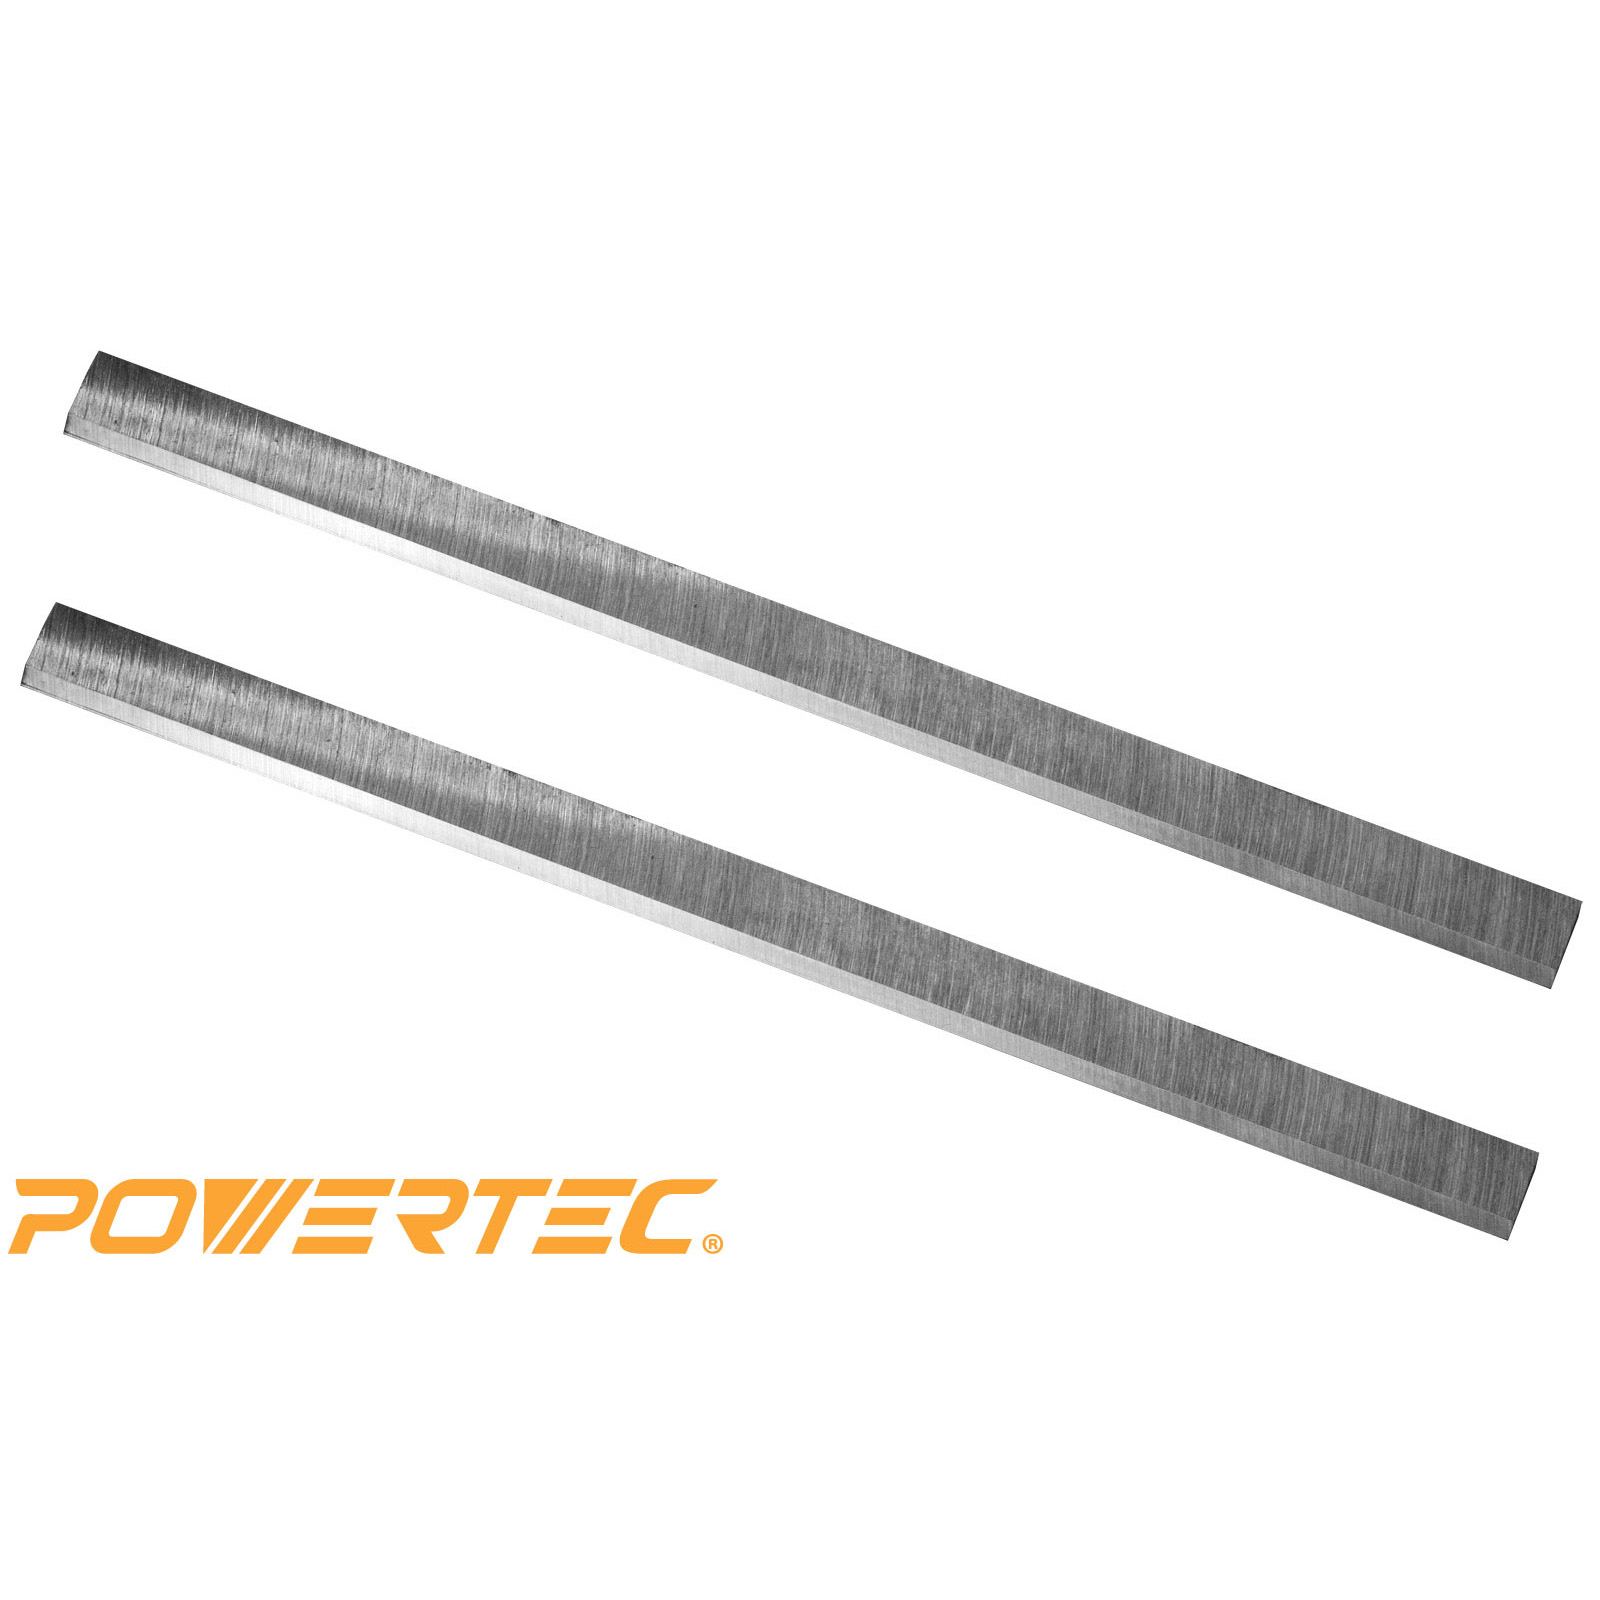 Powertec 128182 12-1/2-Inch Planer Knives for Craftsman 233780 , HSS, Set of 2